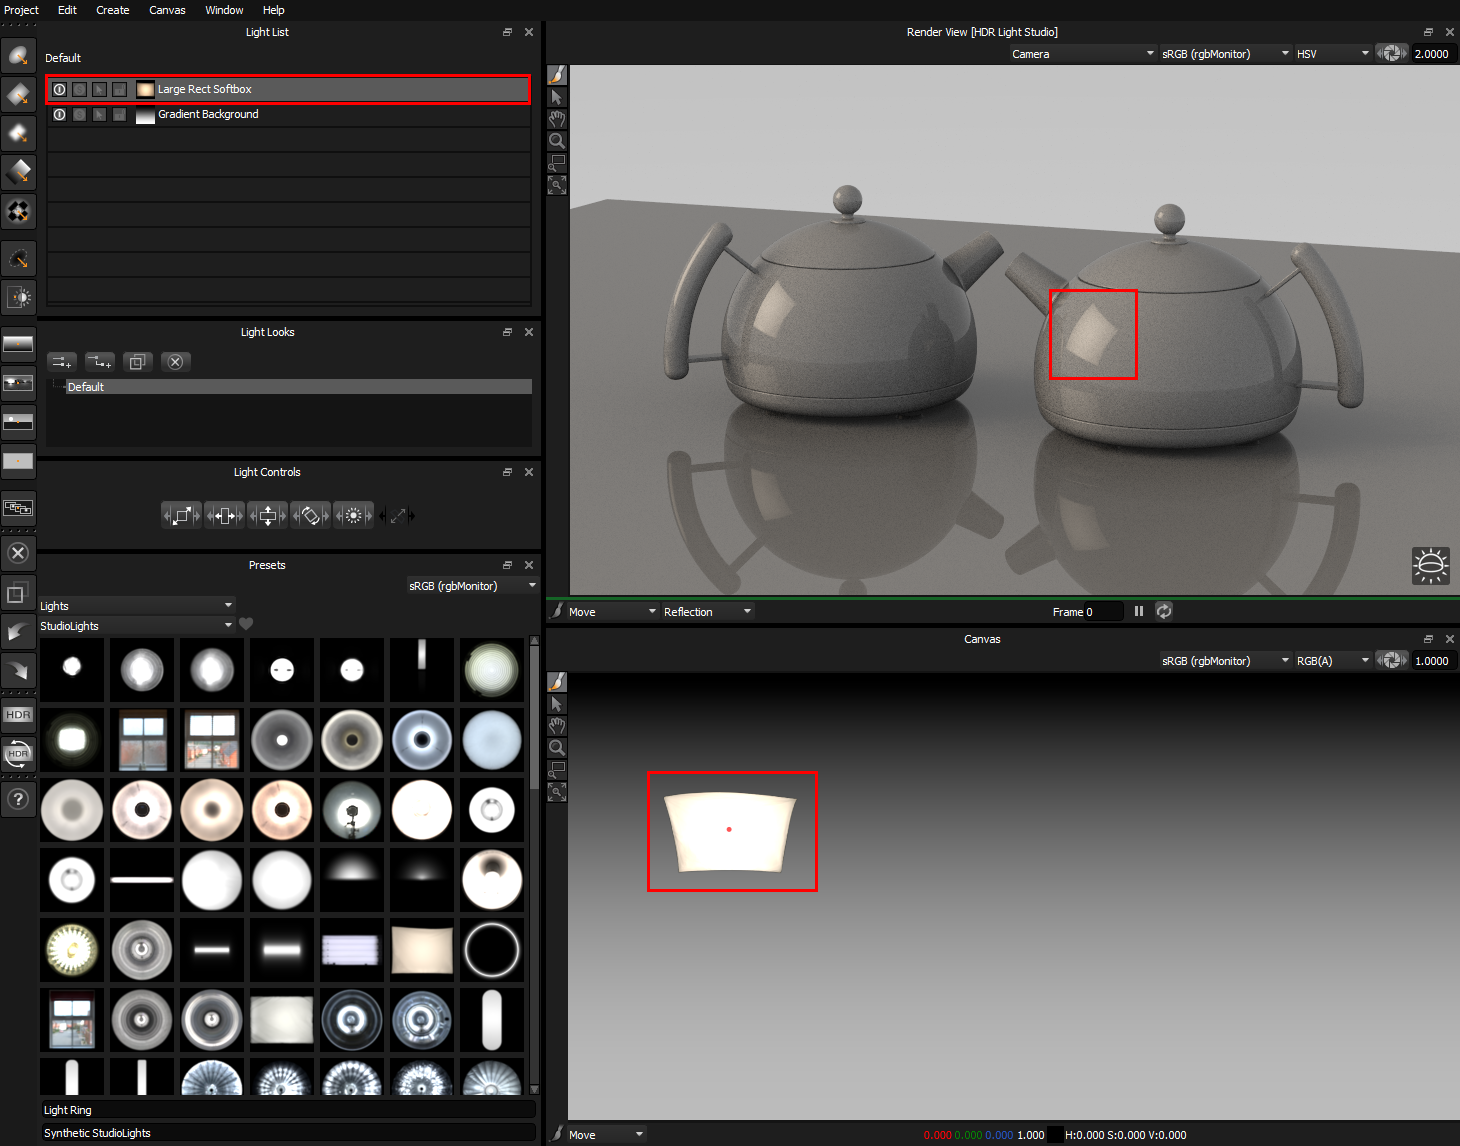 Figure 12: HDR Light Studio interface after creating a light